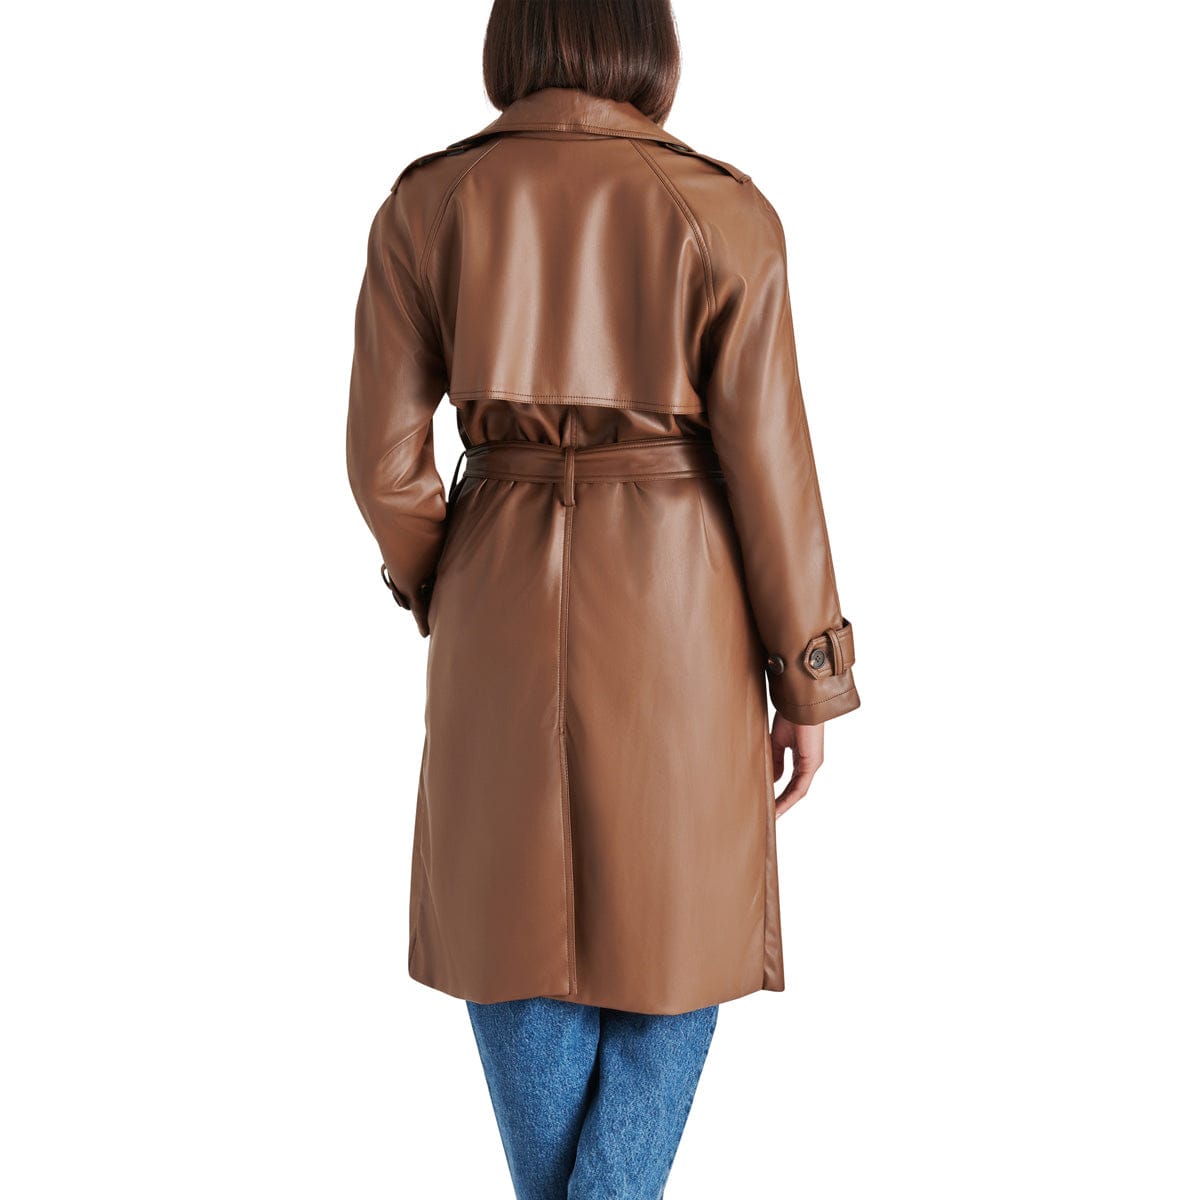 Steve Madden Ilia Trench Coat brown back | MILK MONEY milkmoney.co | cute jackets for women. cute coats. cool jackets for women. stylish jackets for women. trendy jackets for women. trendy womens coats.